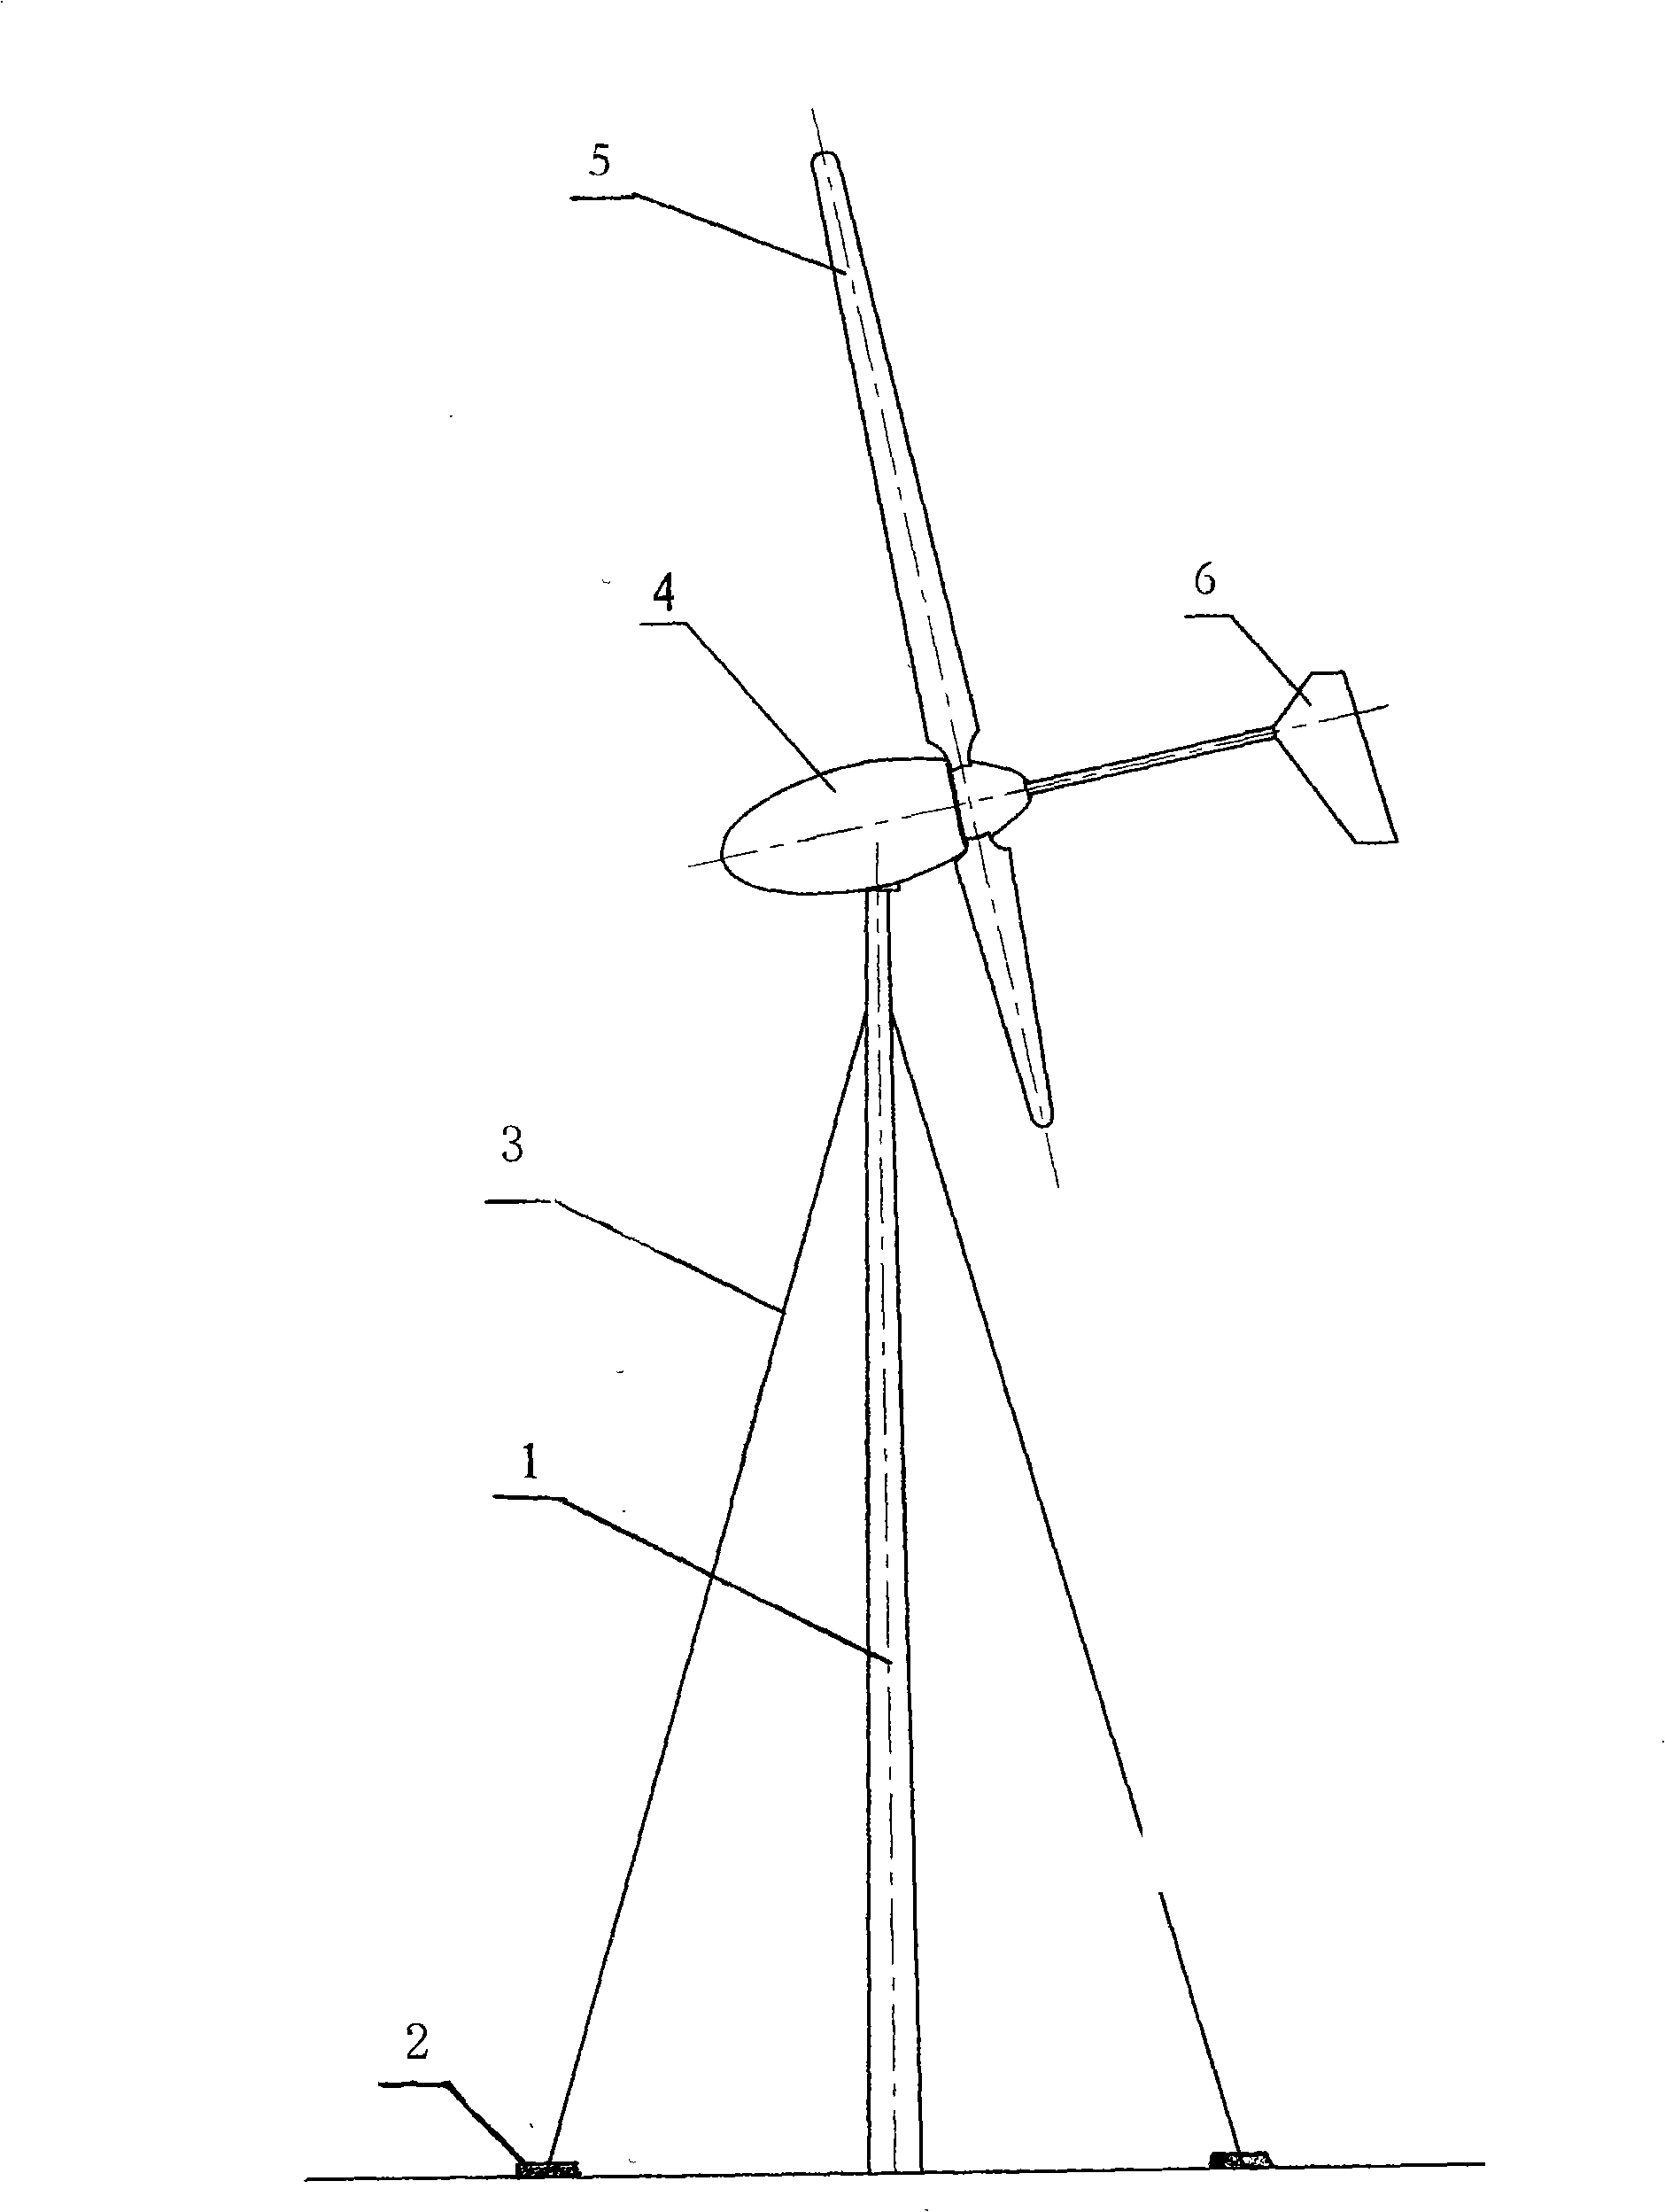 Postposition type sloped rotating paddle wind turbine